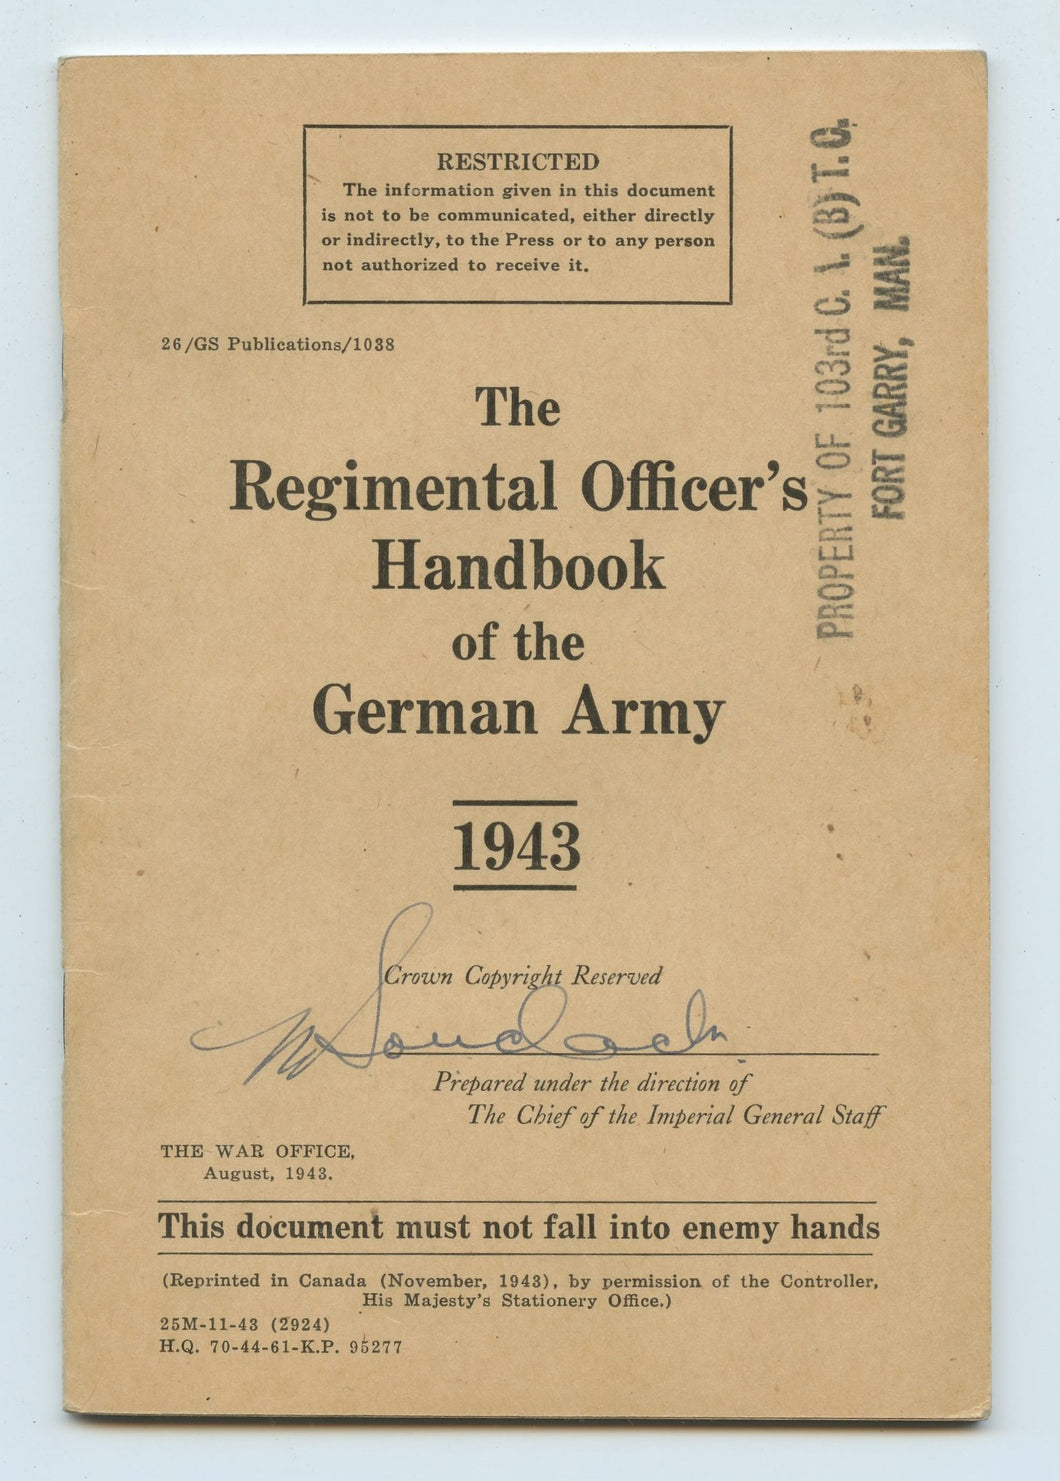 The Regimental Officer's Handbook of the German Army 1943